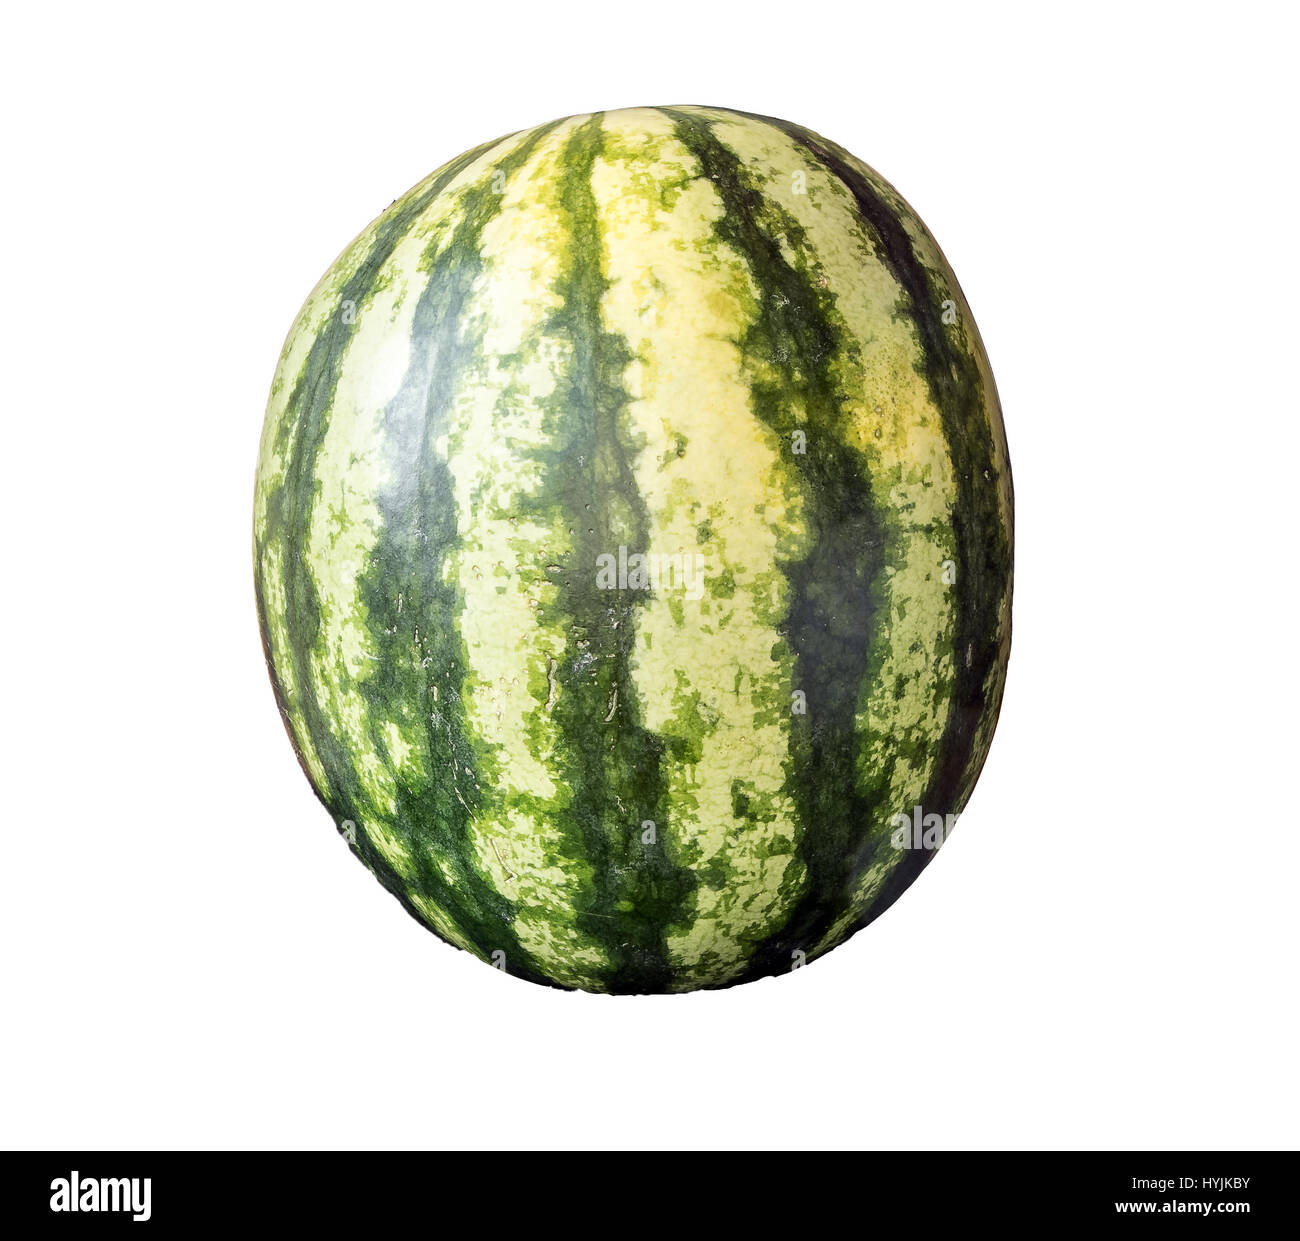 Whole watermelon isolated on white background Stock Photo